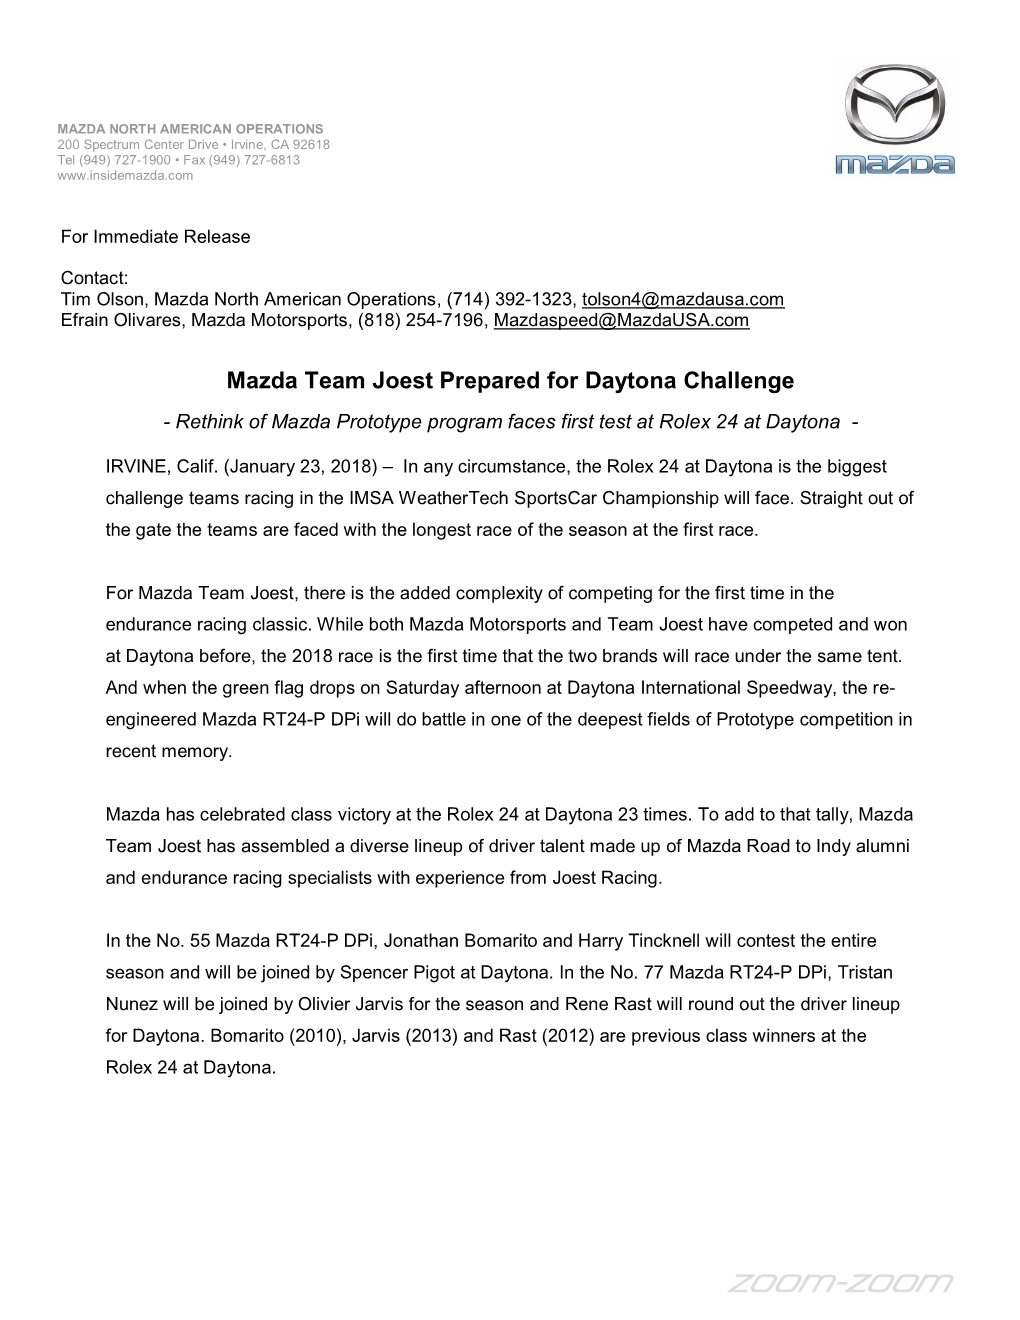 Mazda Team Joest Prepared for Daytona Challenge